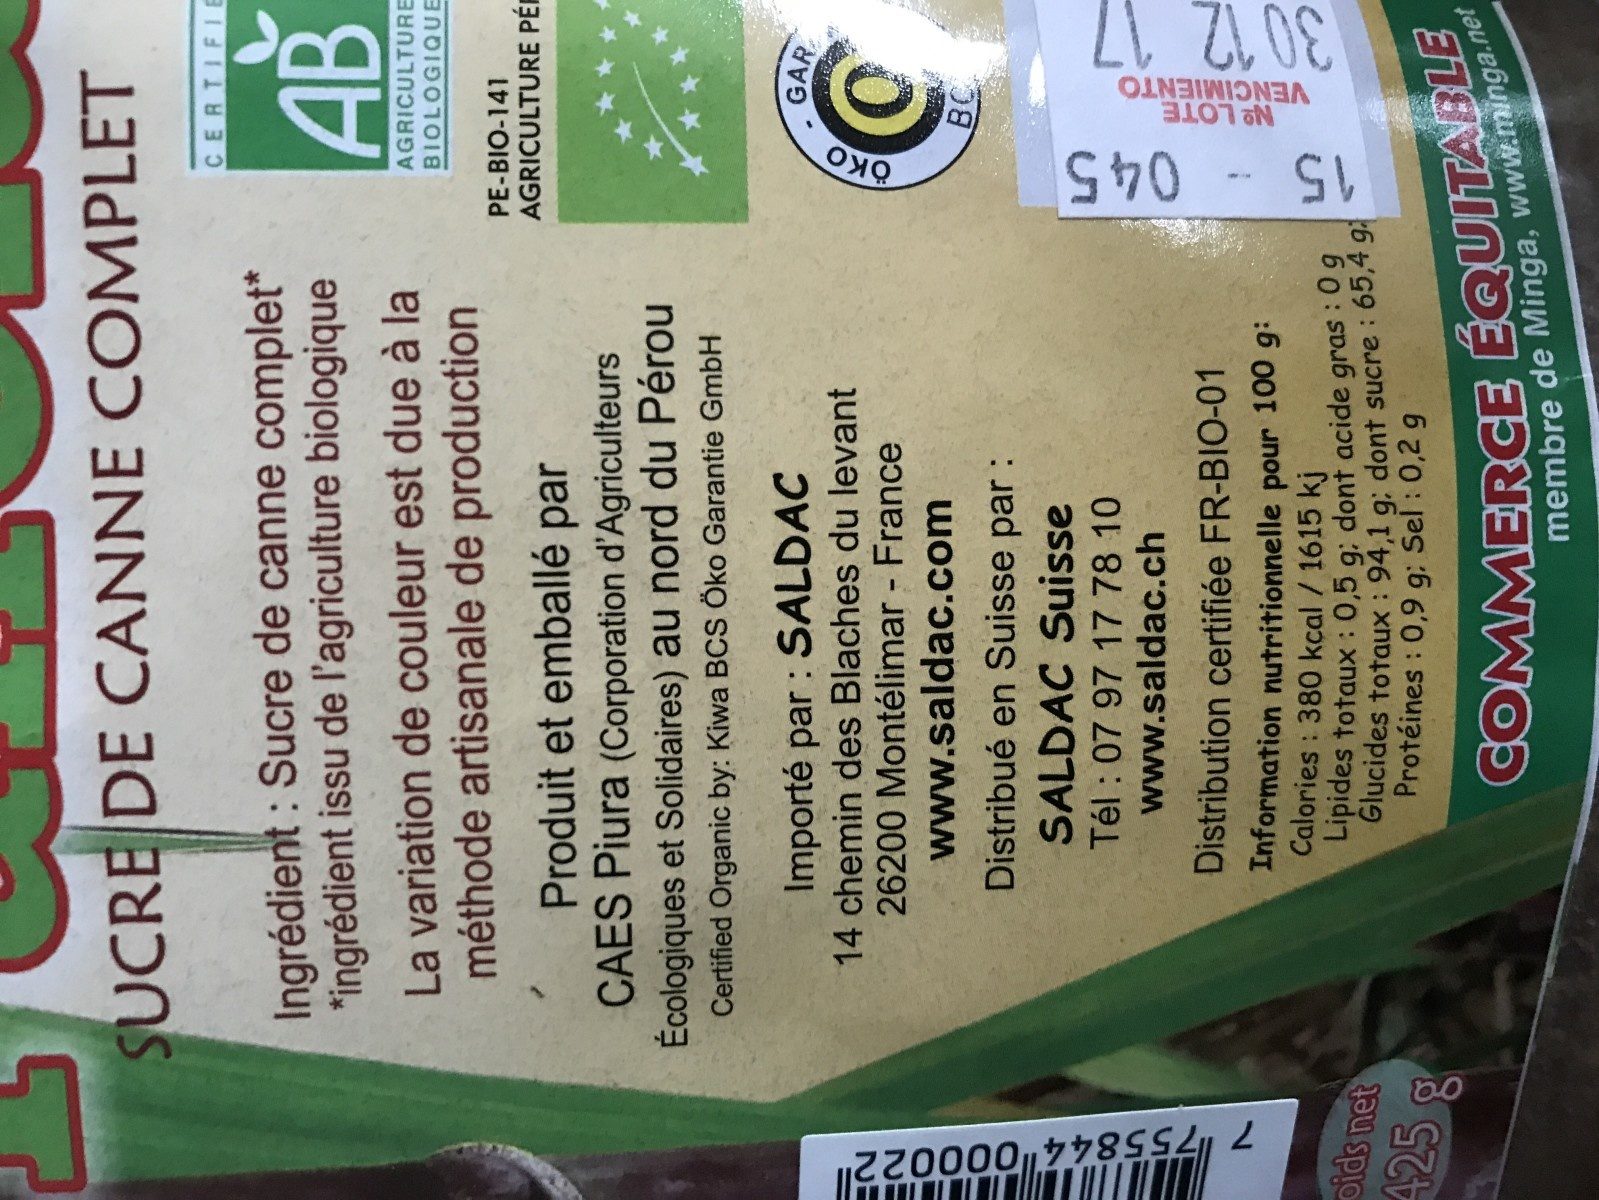 Panela sucre de canne complet bio - Ingredients - fr